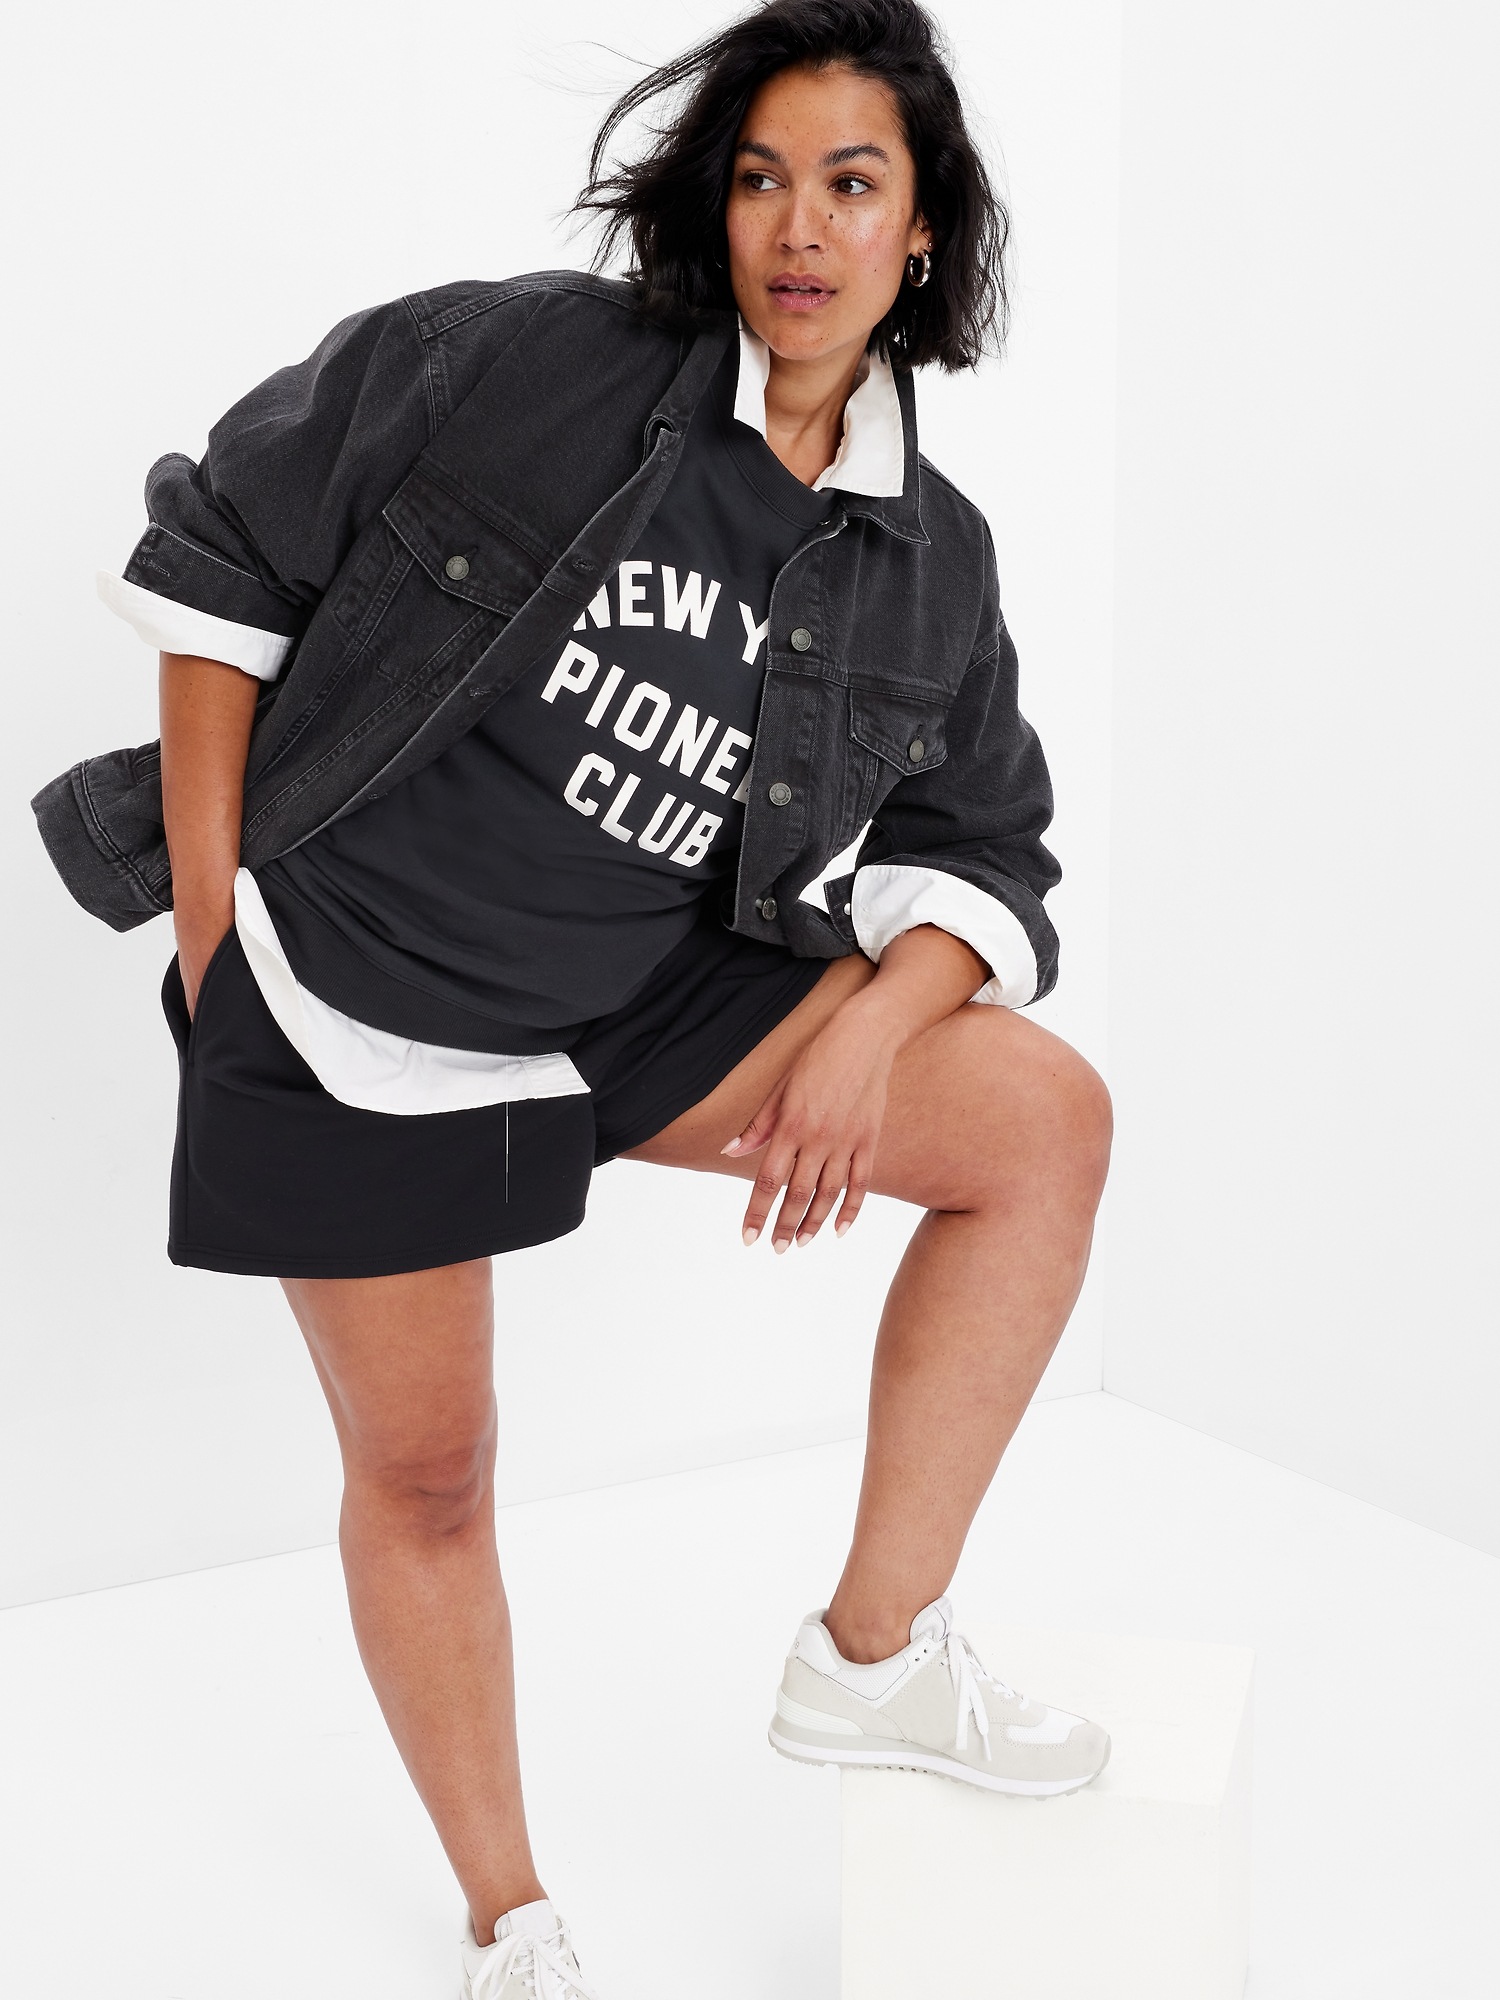 Gap Women's Oversized Icon Denim Jacket